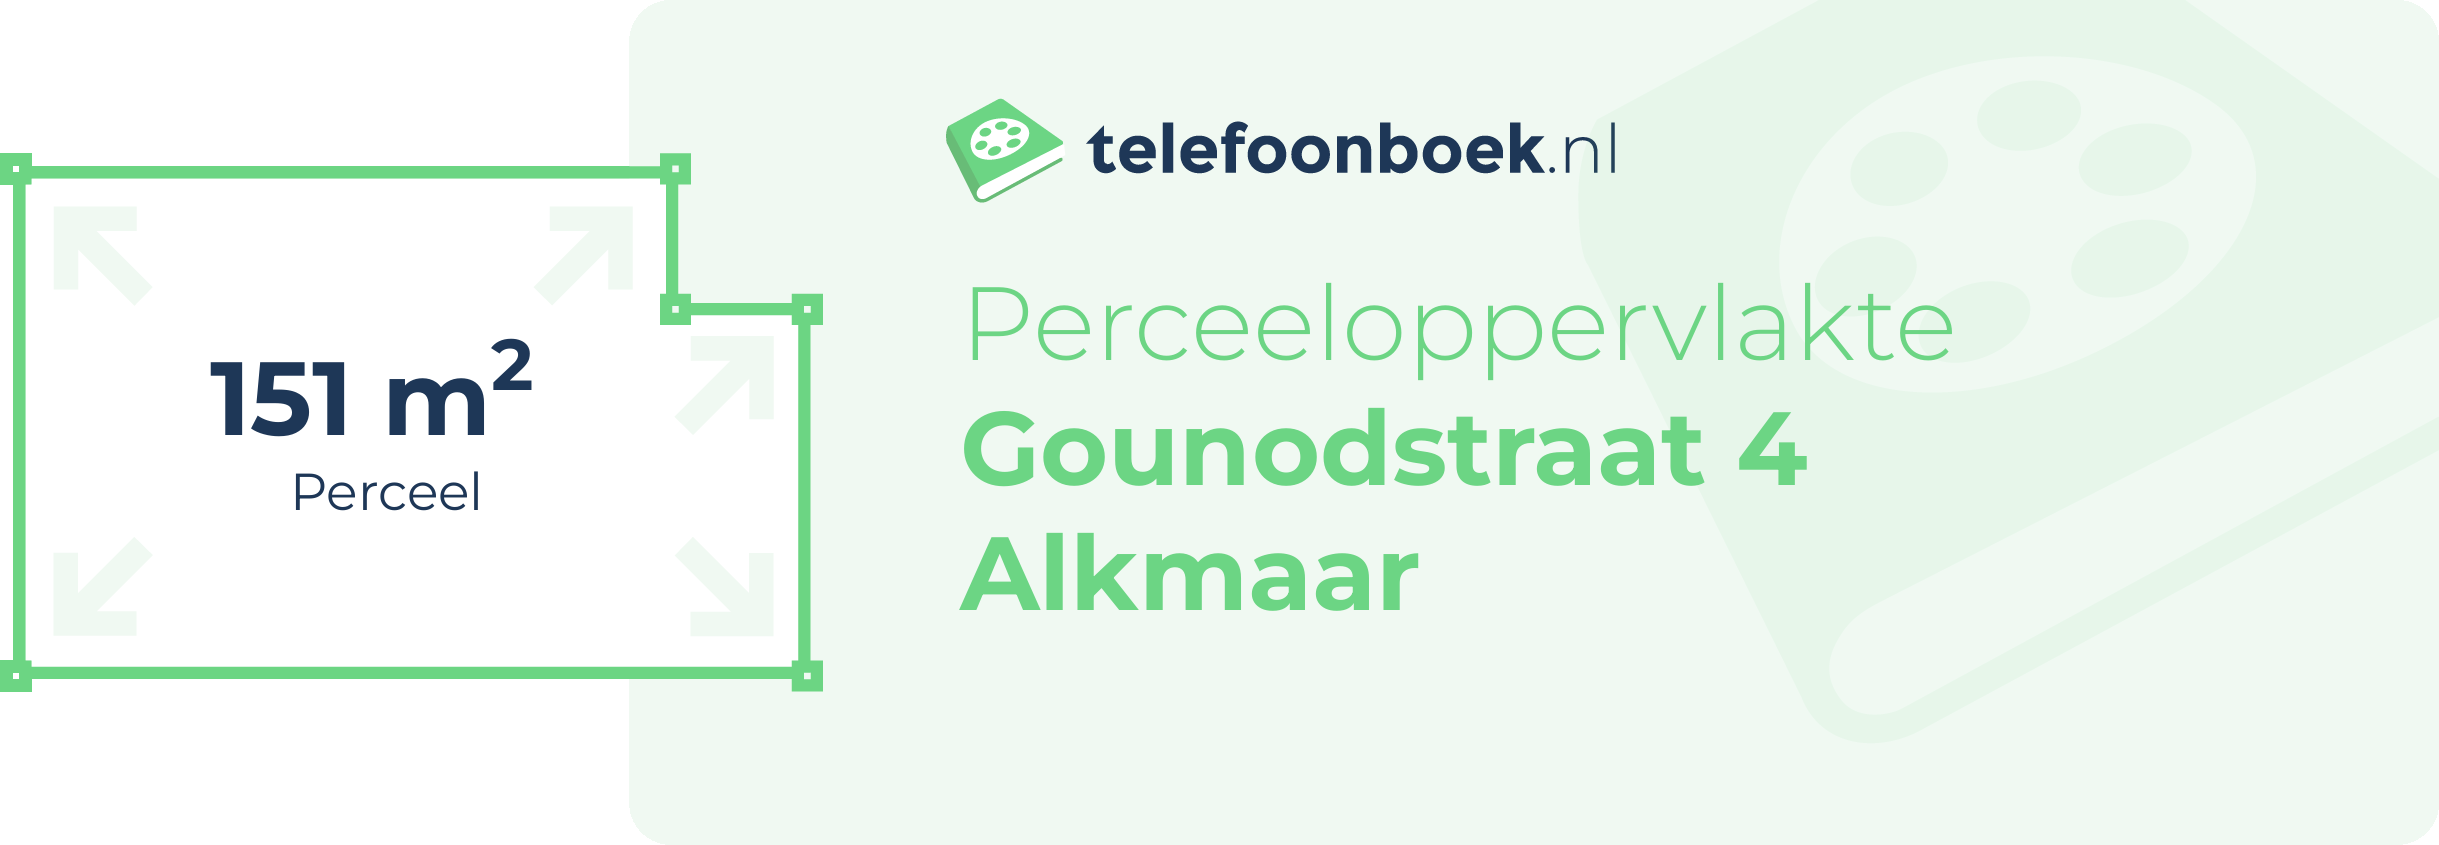 Perceeloppervlakte Gounodstraat 4 Alkmaar